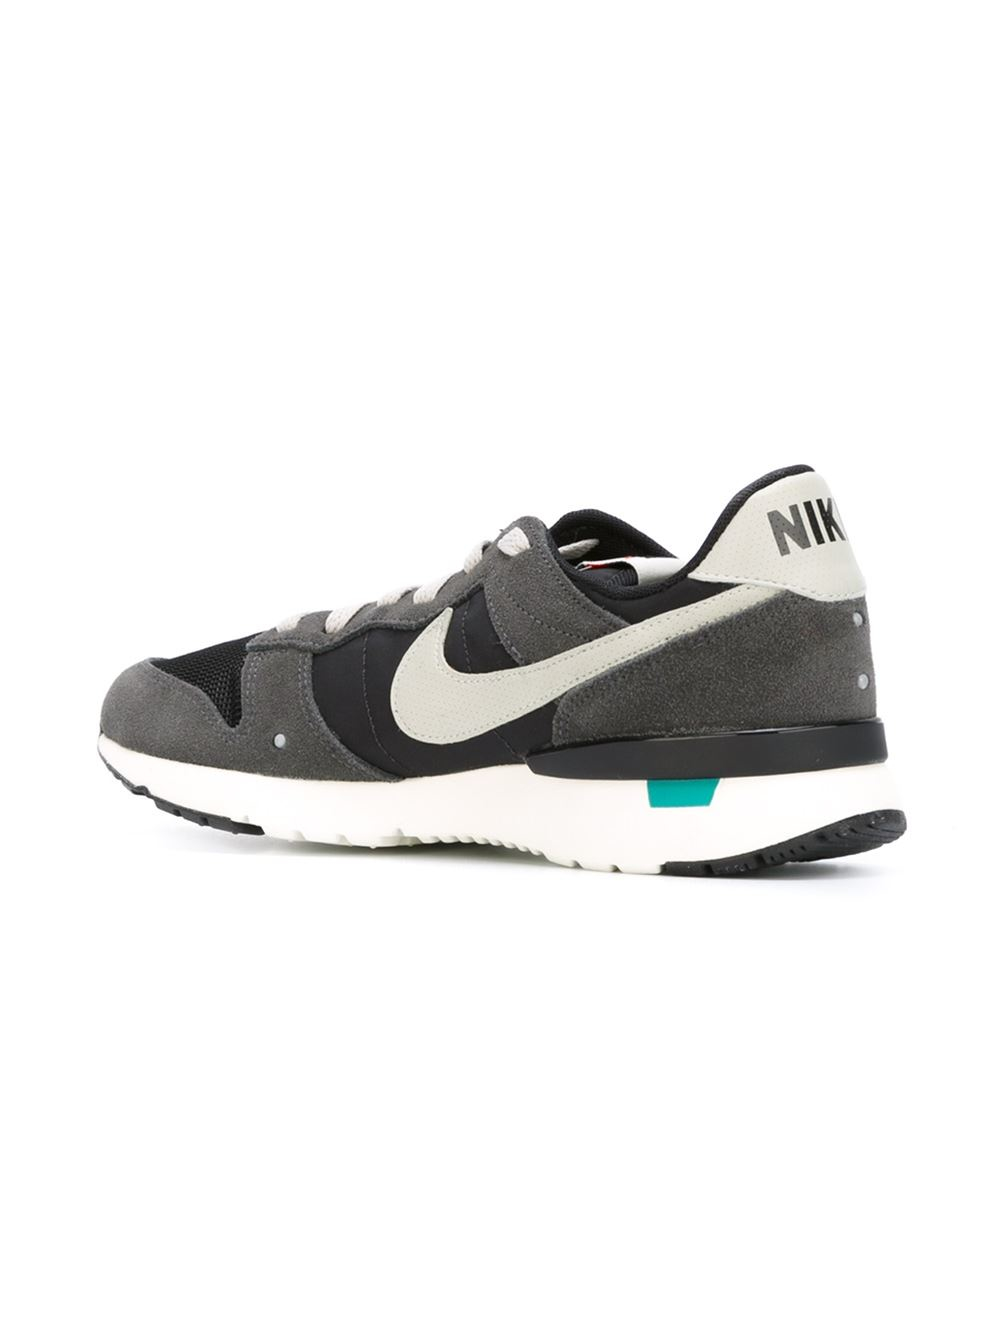 Lyst Nike 'archive 85' Sneakers in Gray